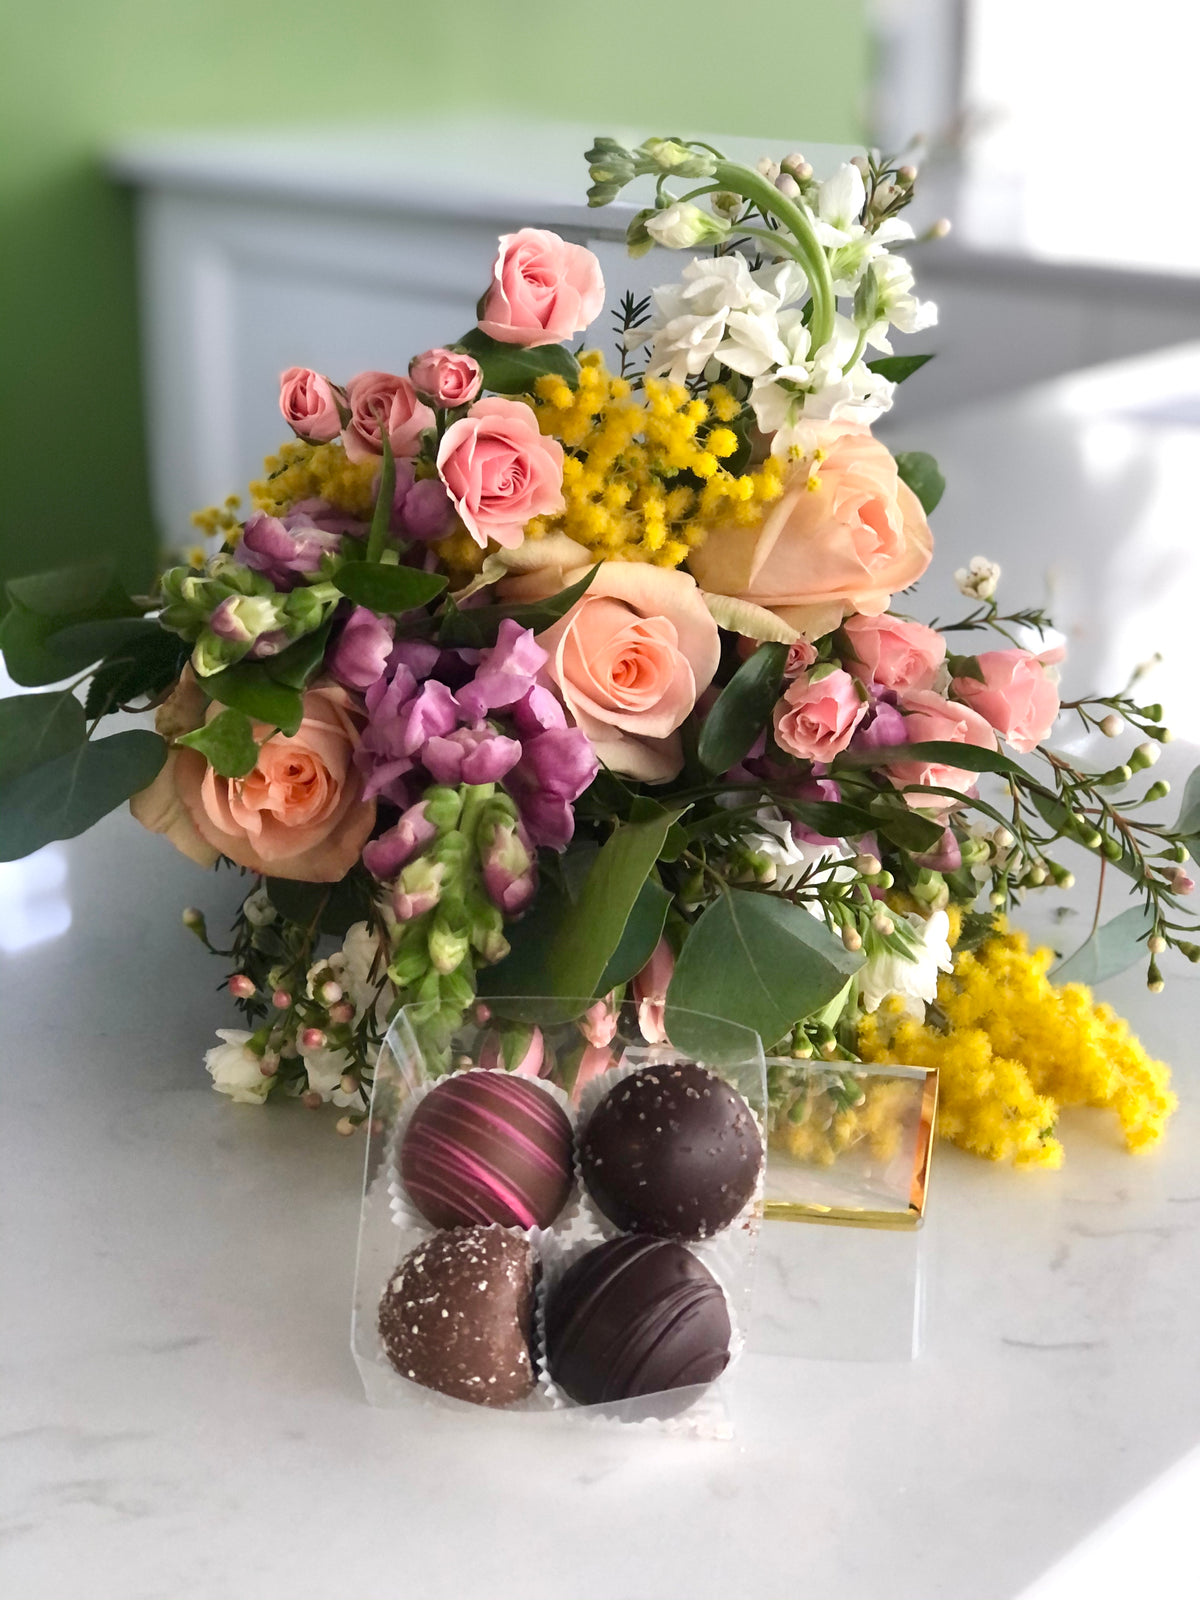 Bouquet & Chocolates Gift Set